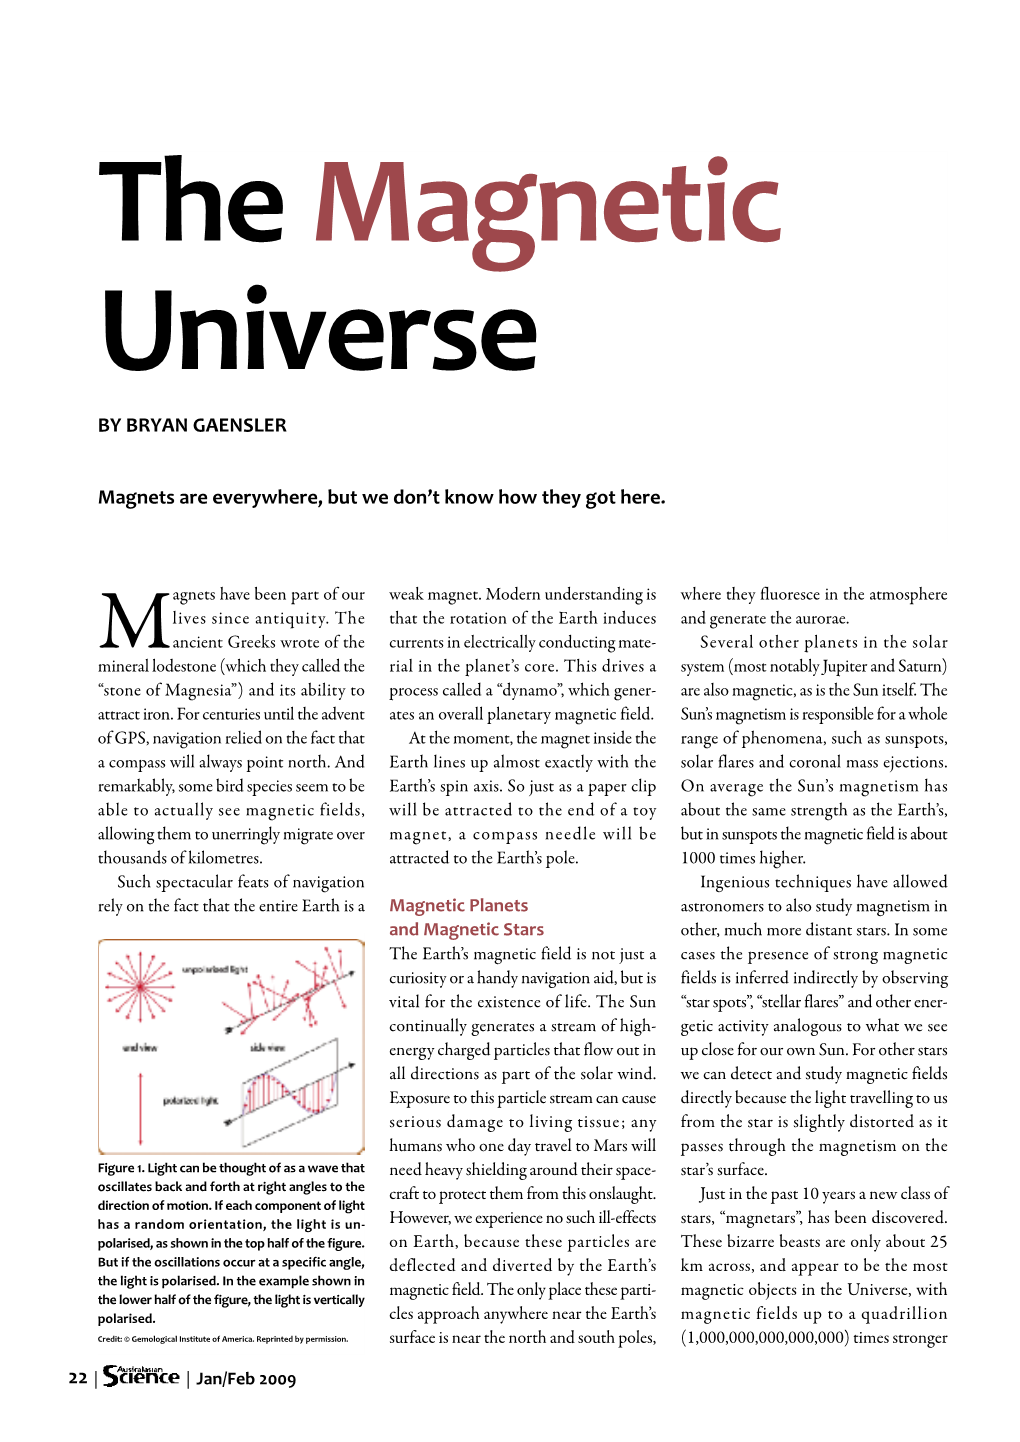 Magnetic Universe by BRYAN GAENSLER